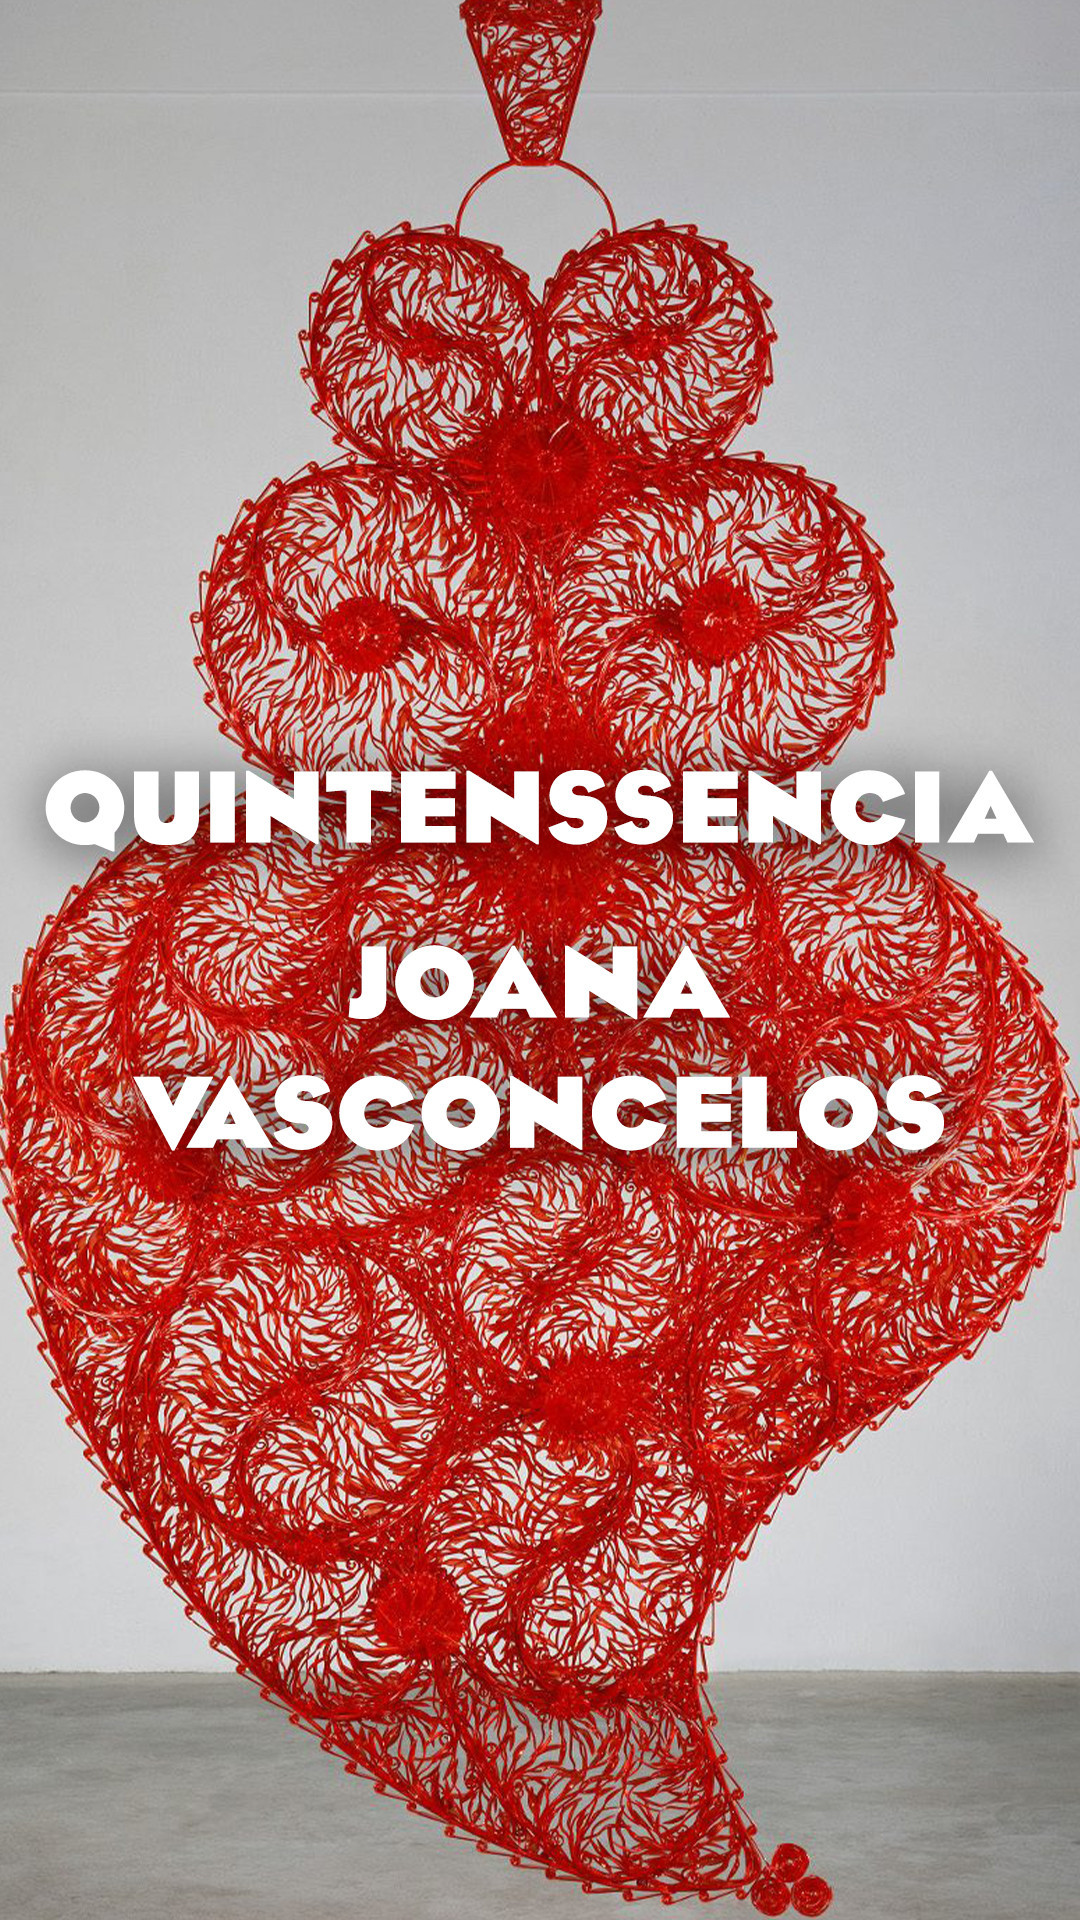 Quintessencial Joana Vasconcelos 